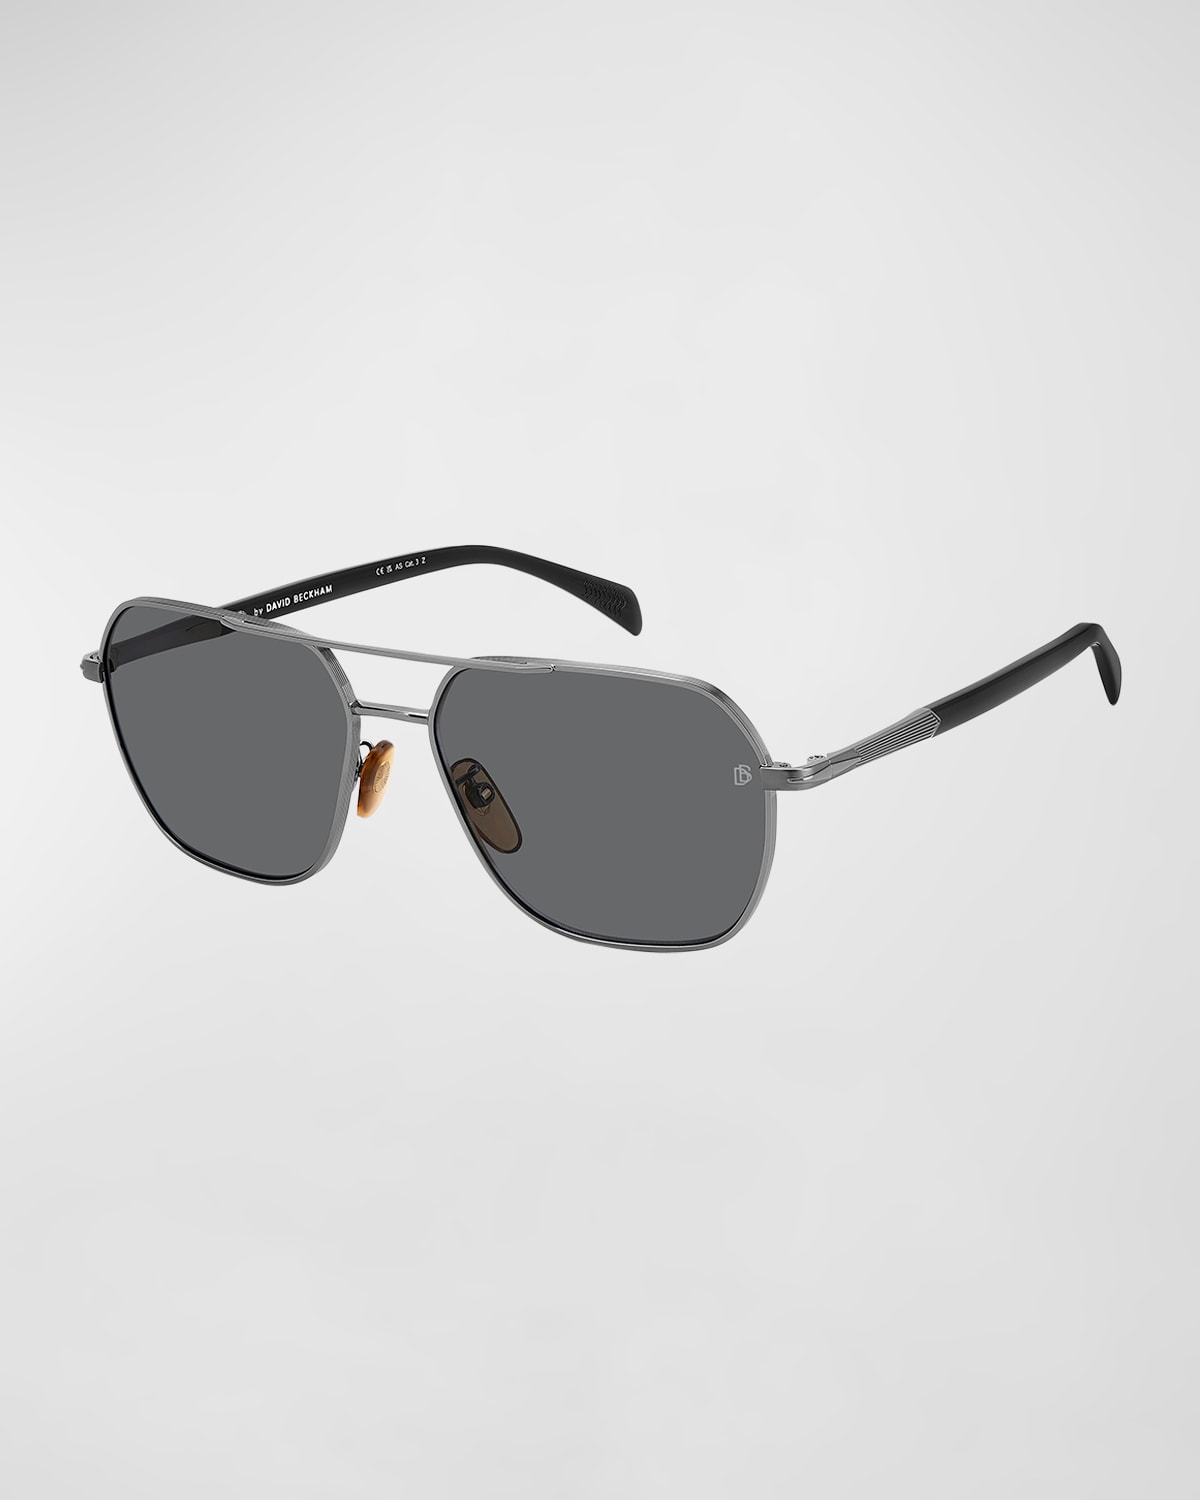 Men's Polarized Metal Aviator Sunglasses